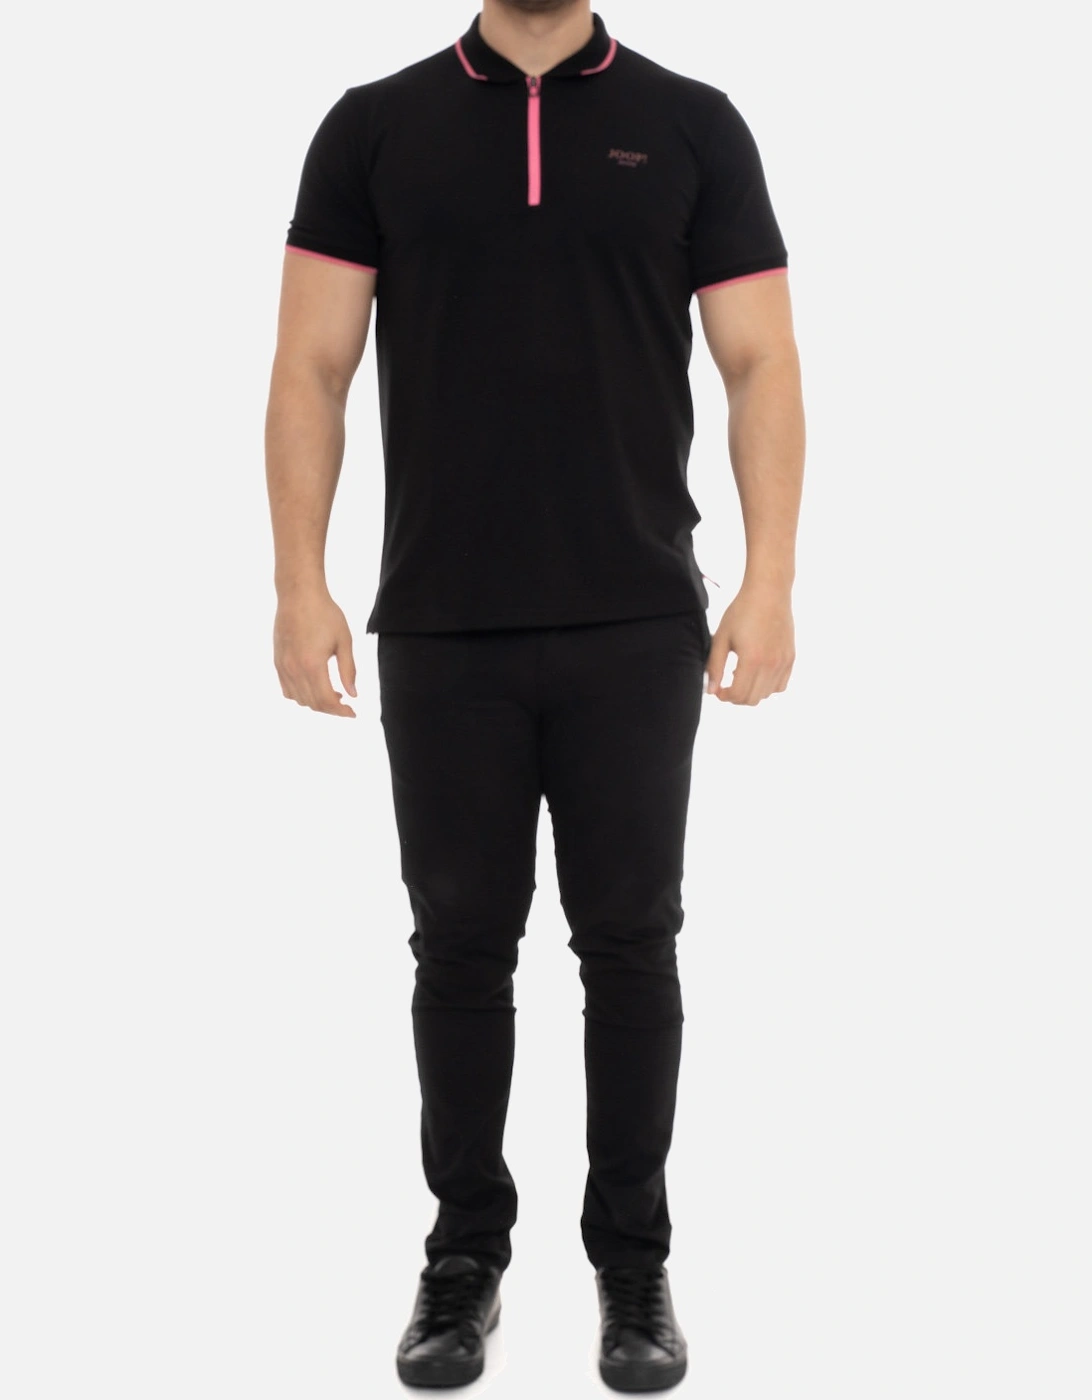 Joop Mens Zip Neck Polo Shirt (Black)